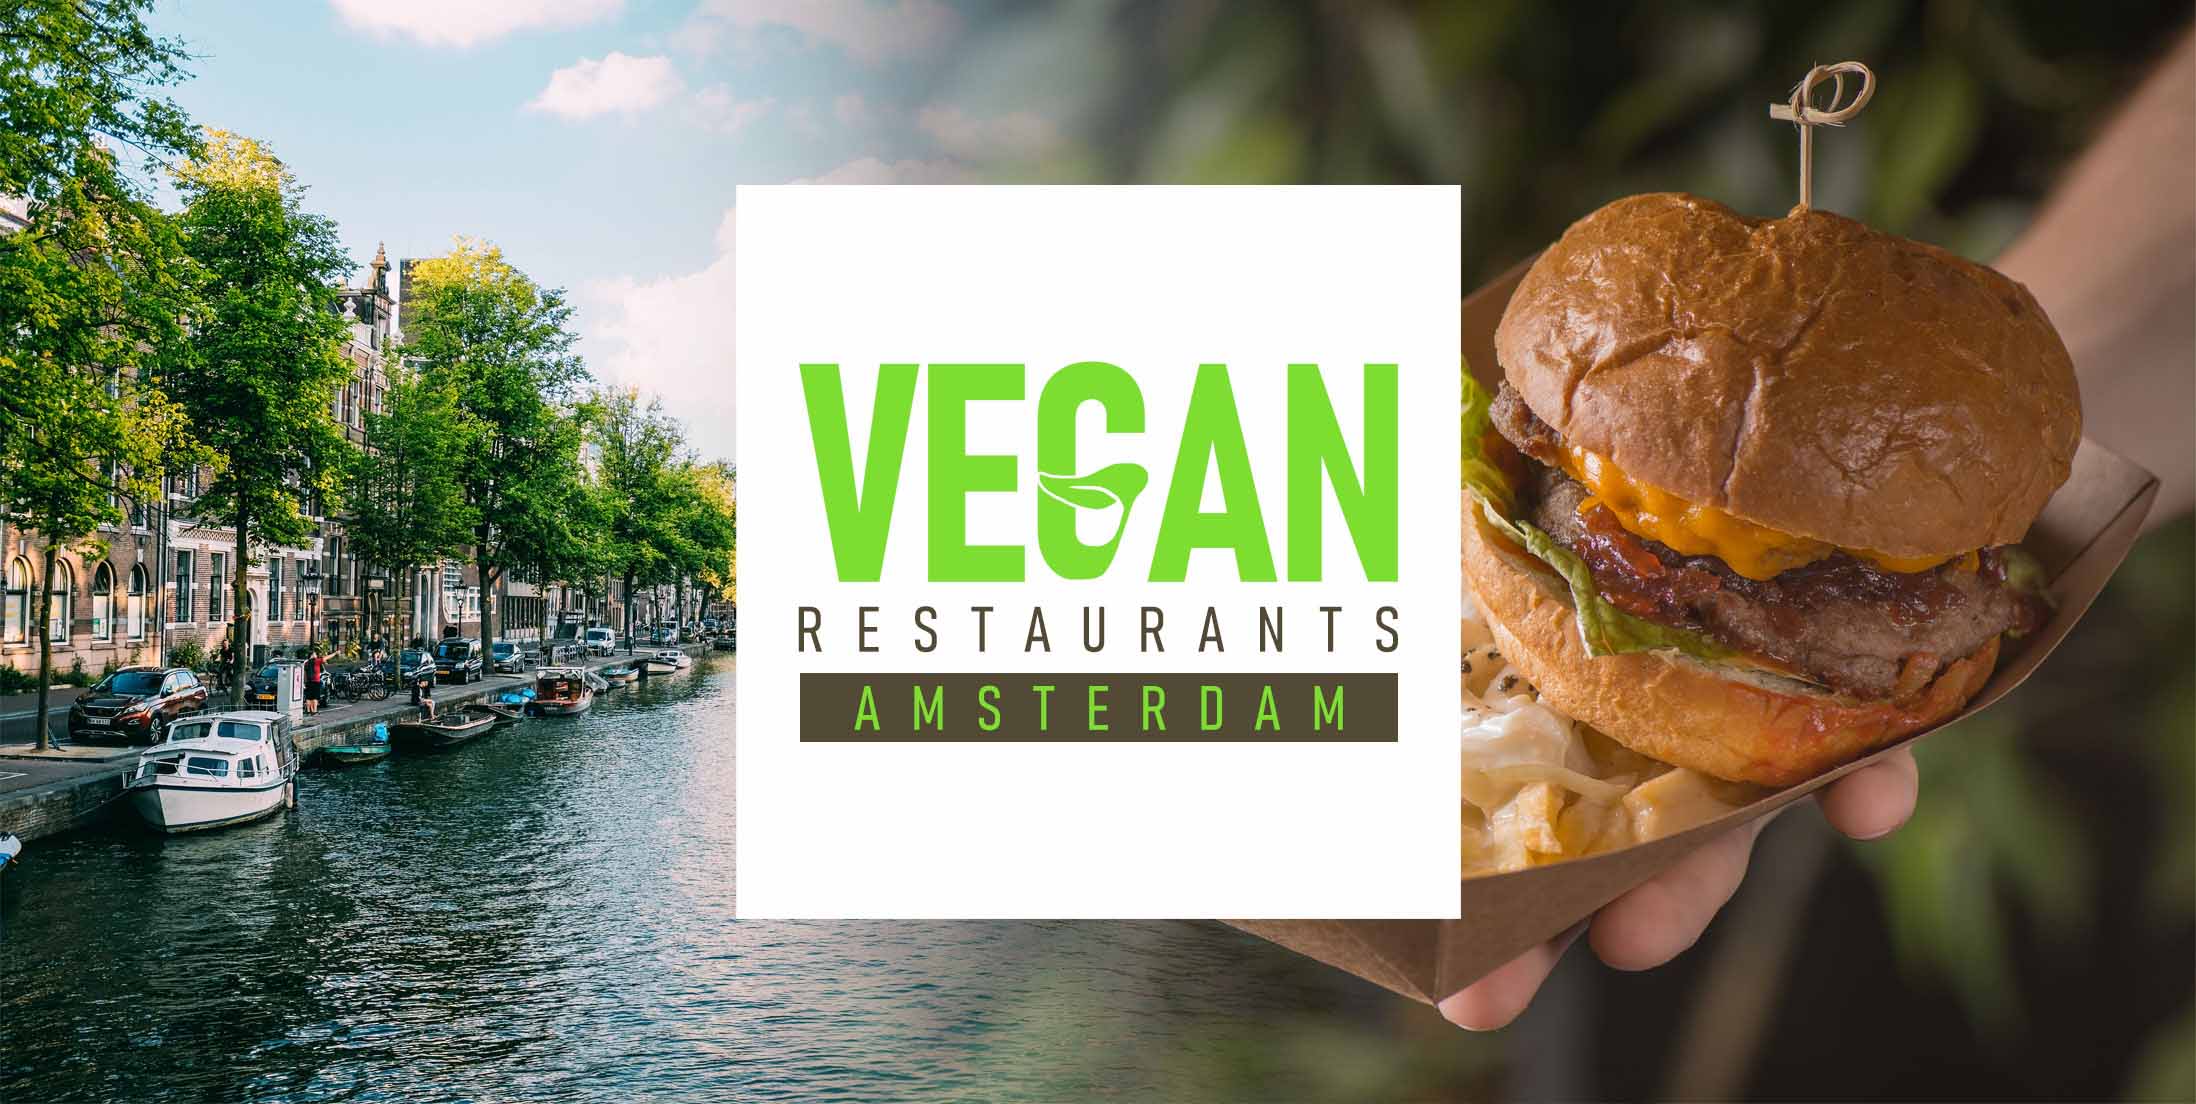 The Best 7 Vegan Restaurants in Amsterdam